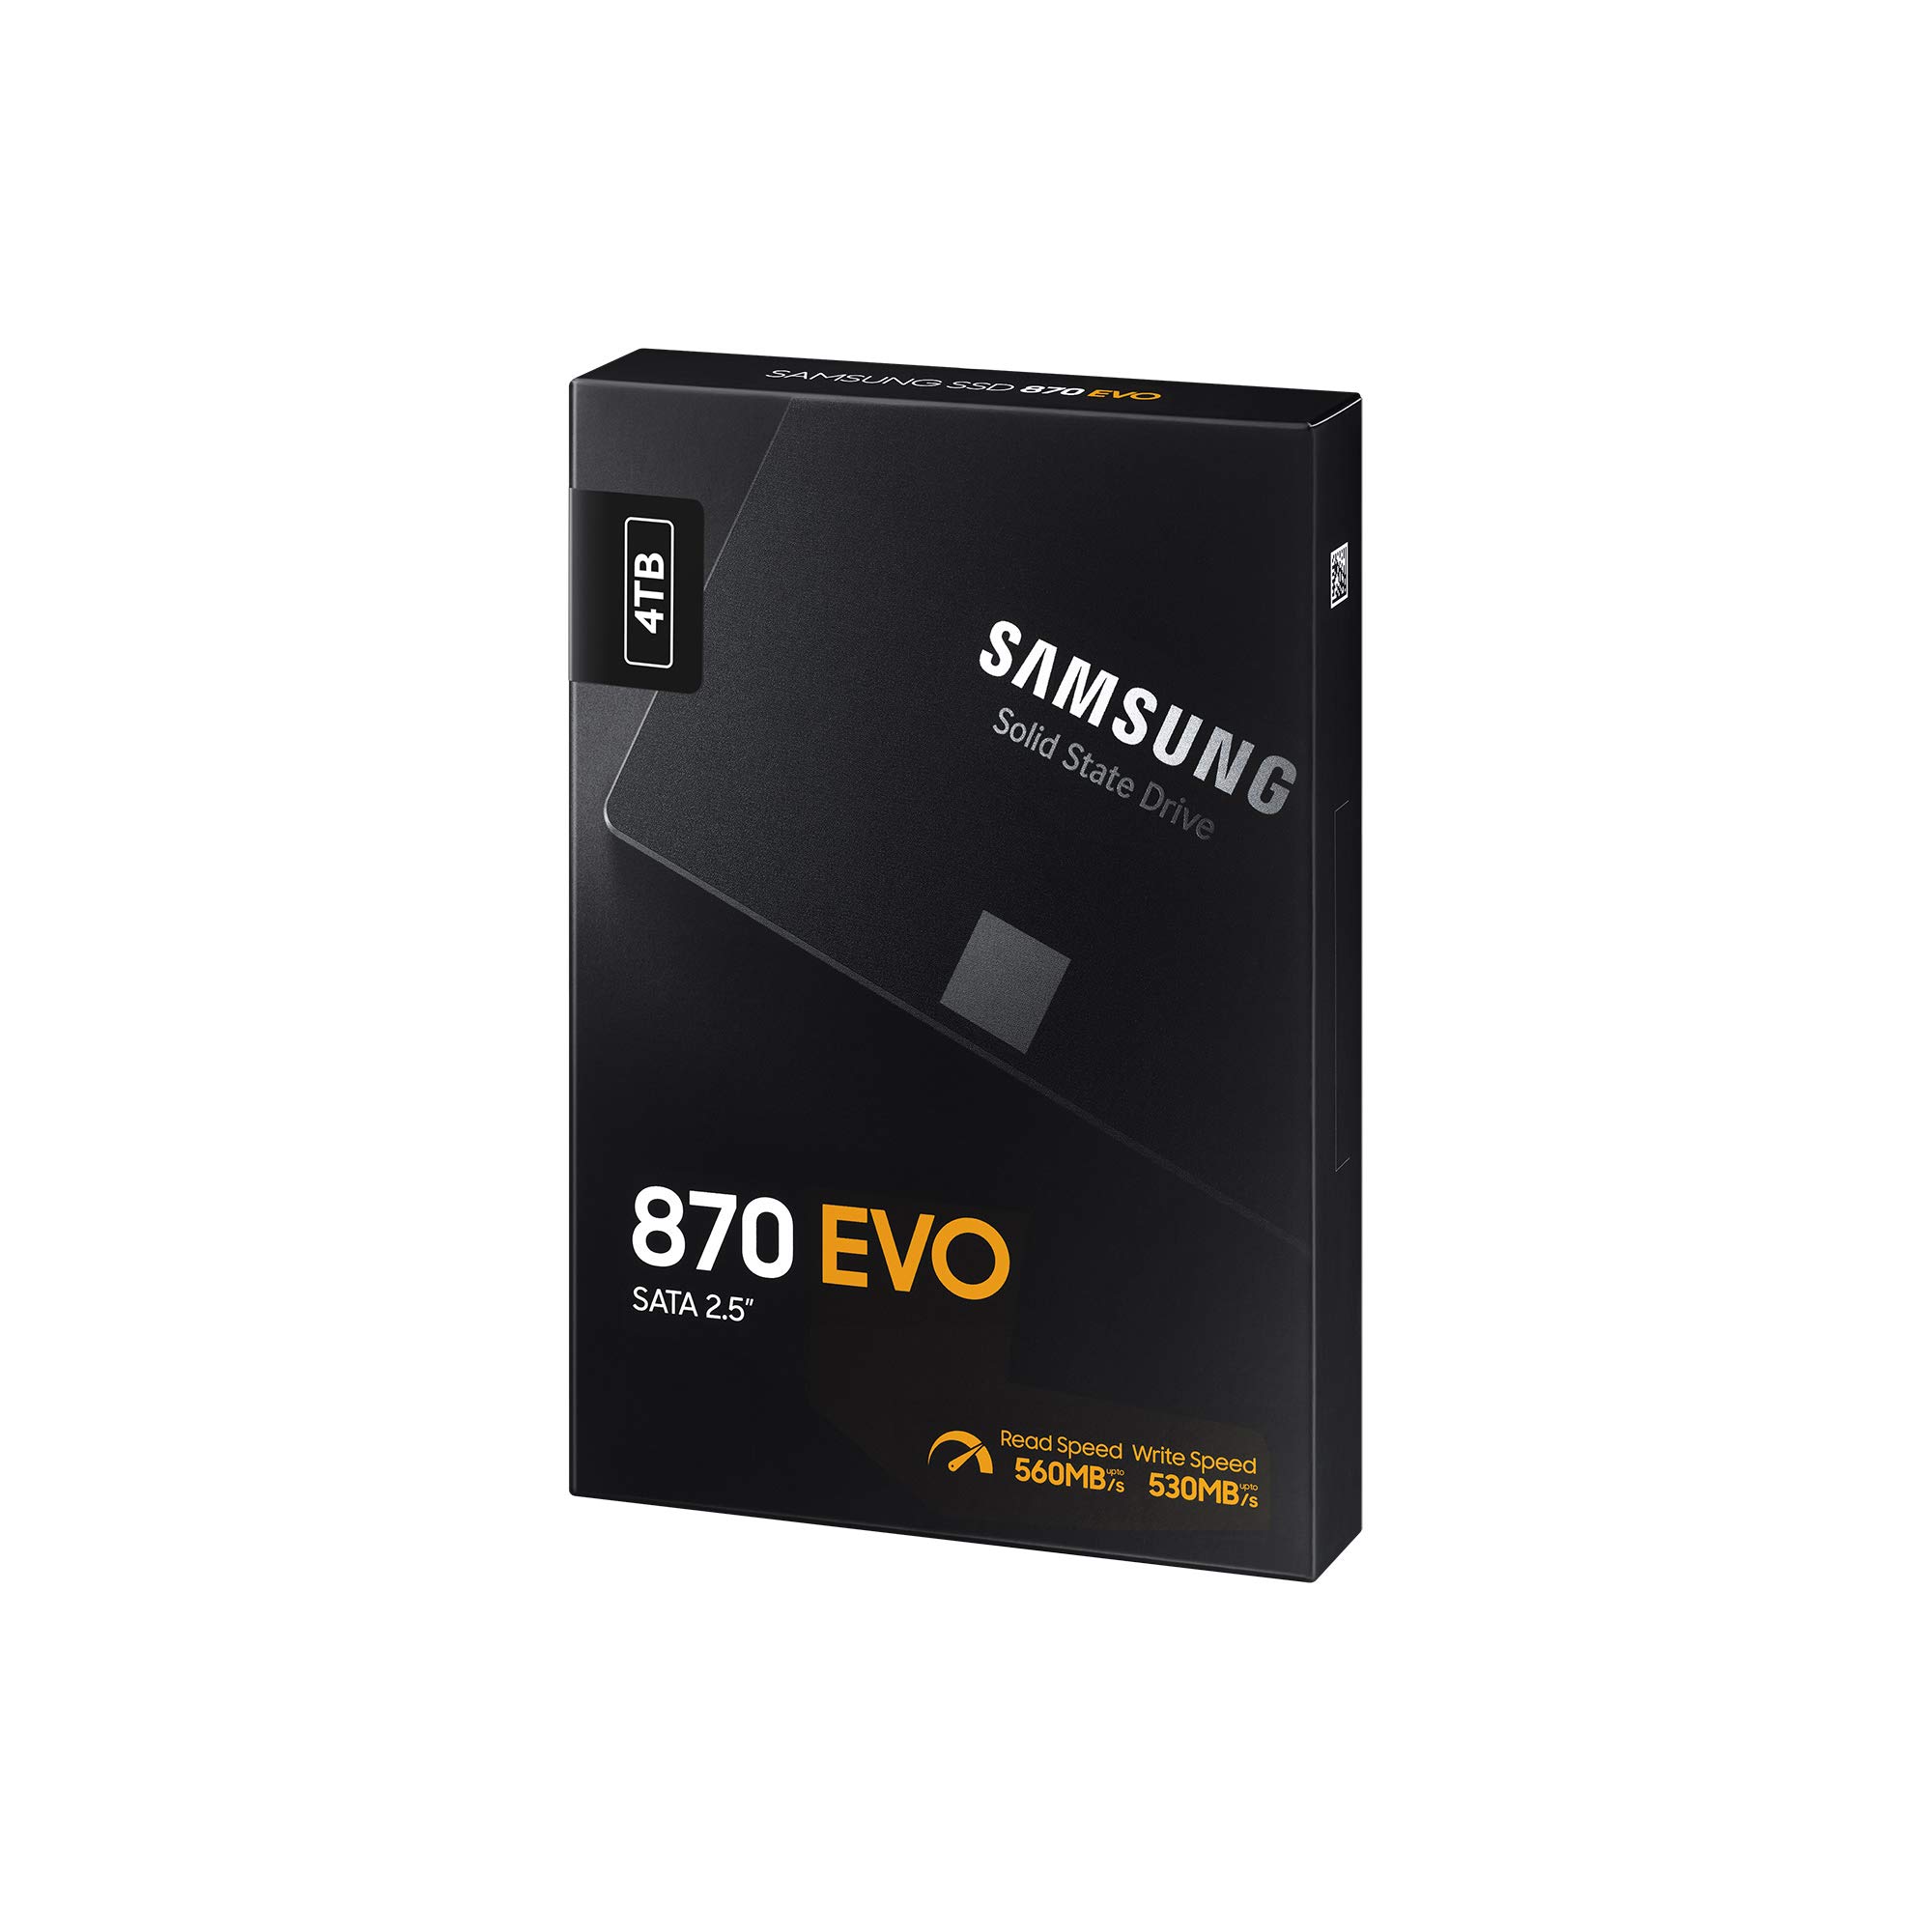 SAMSUNG SSD 870 EVO, 4 TB, Form Factor 2.5”, Intelligent Turbo Write, Magician 6 Software, Black